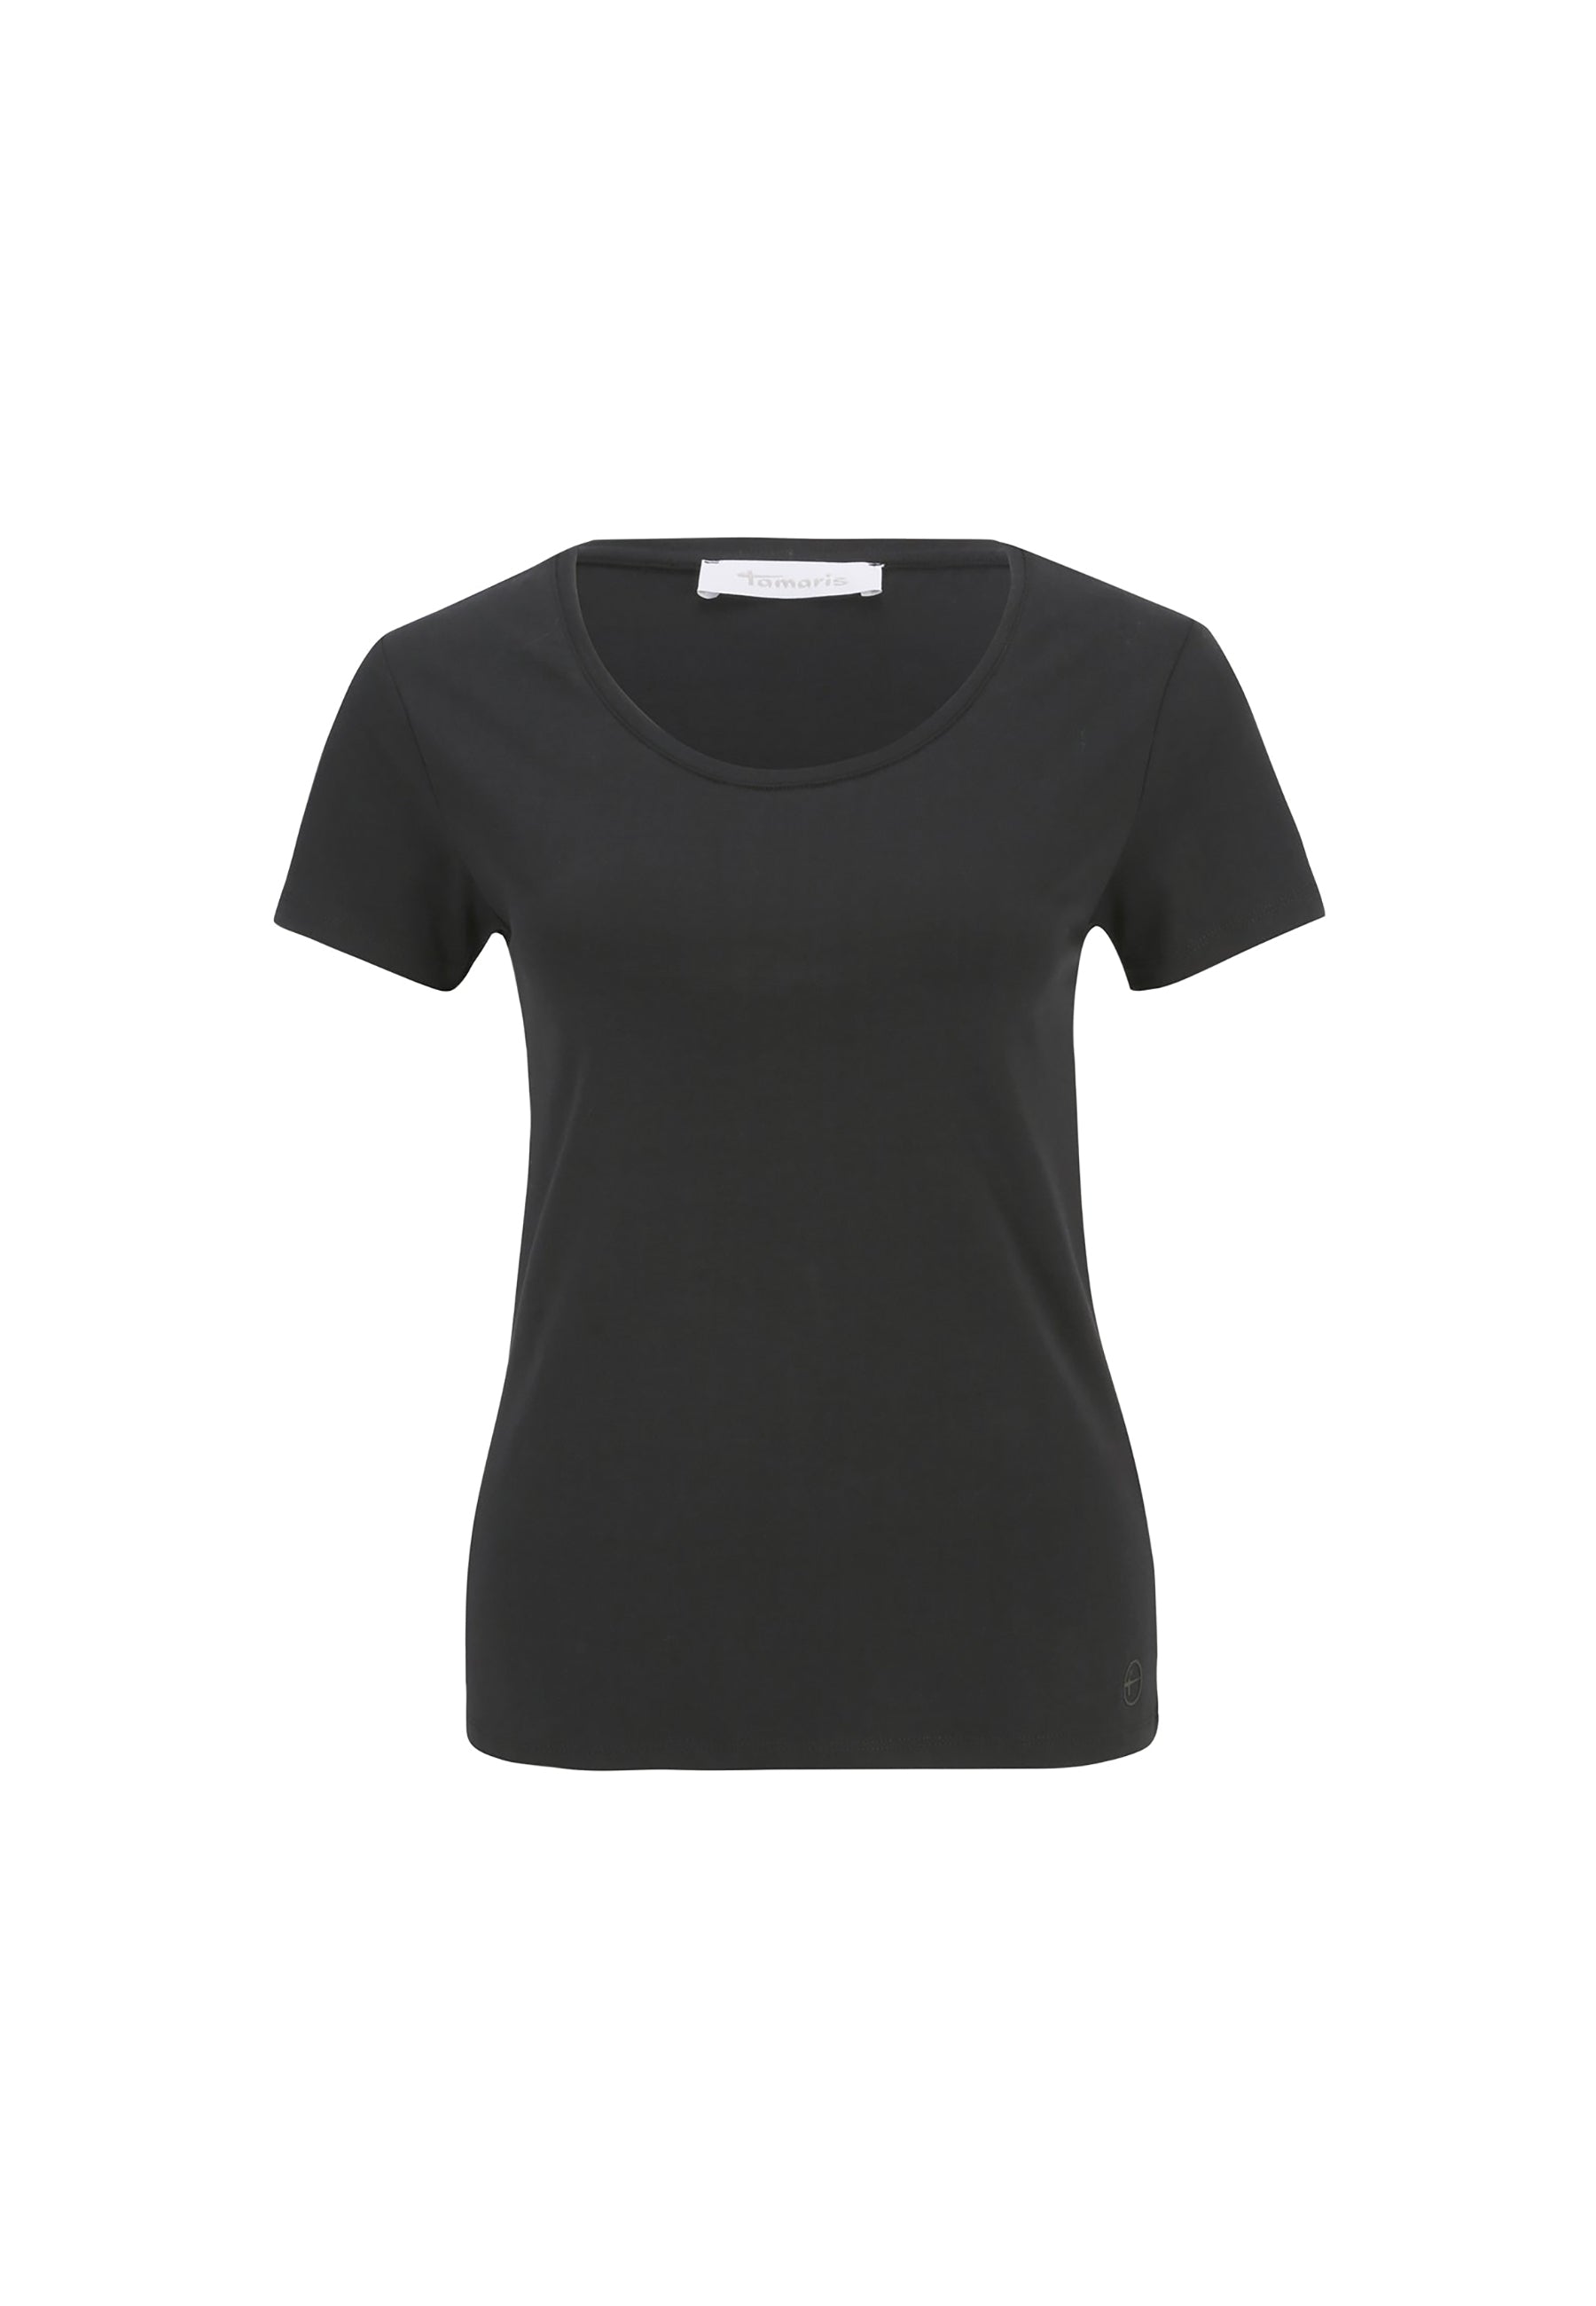 Alba Deep Neck Slim Tee in Black Beauty T-Shirts Tamaris   